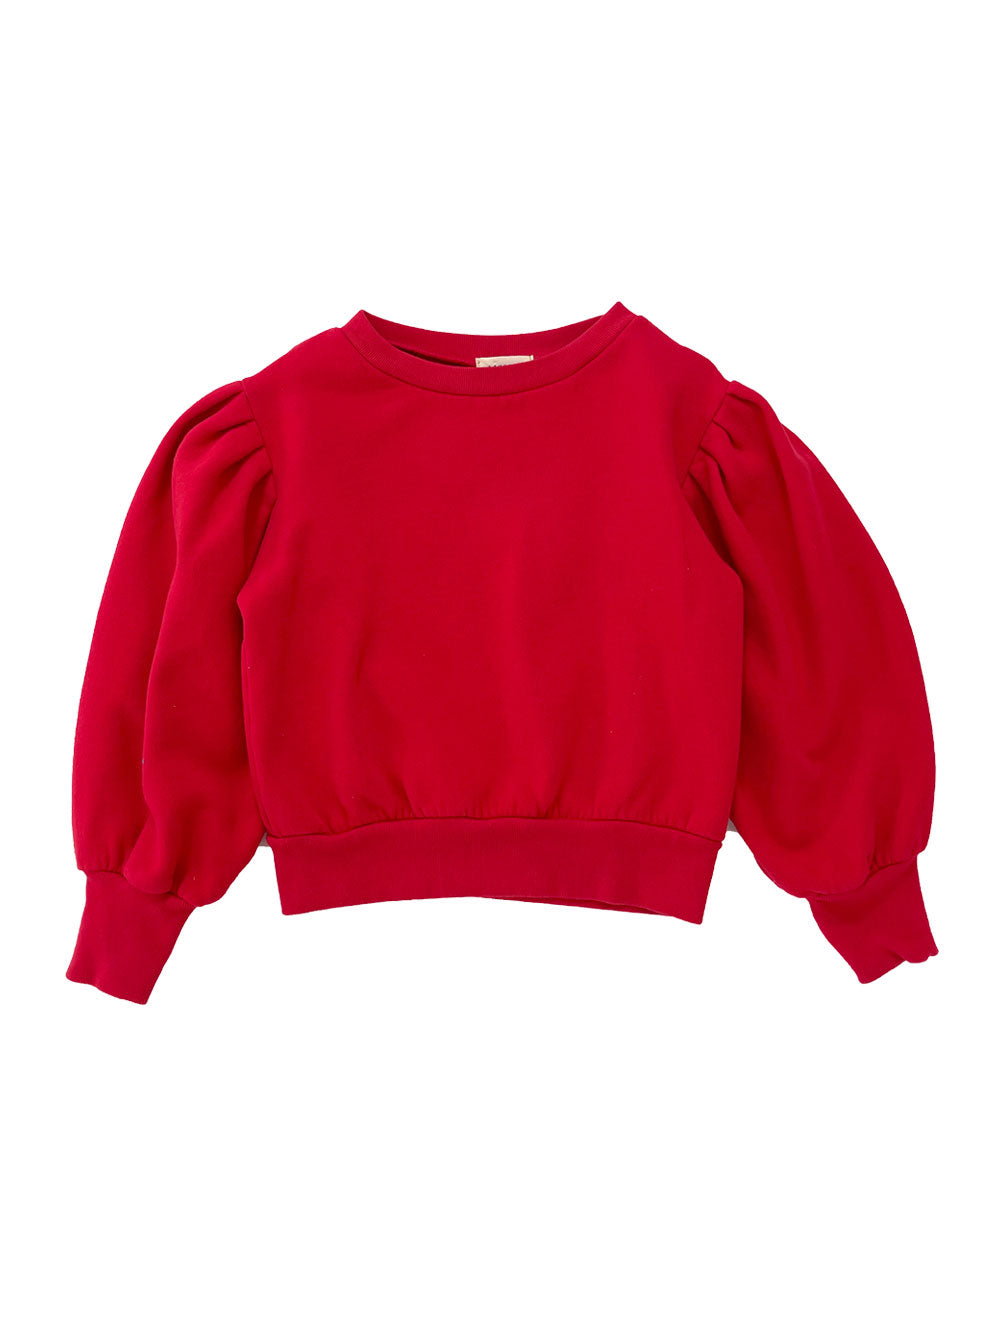 Red Puffed Sweater